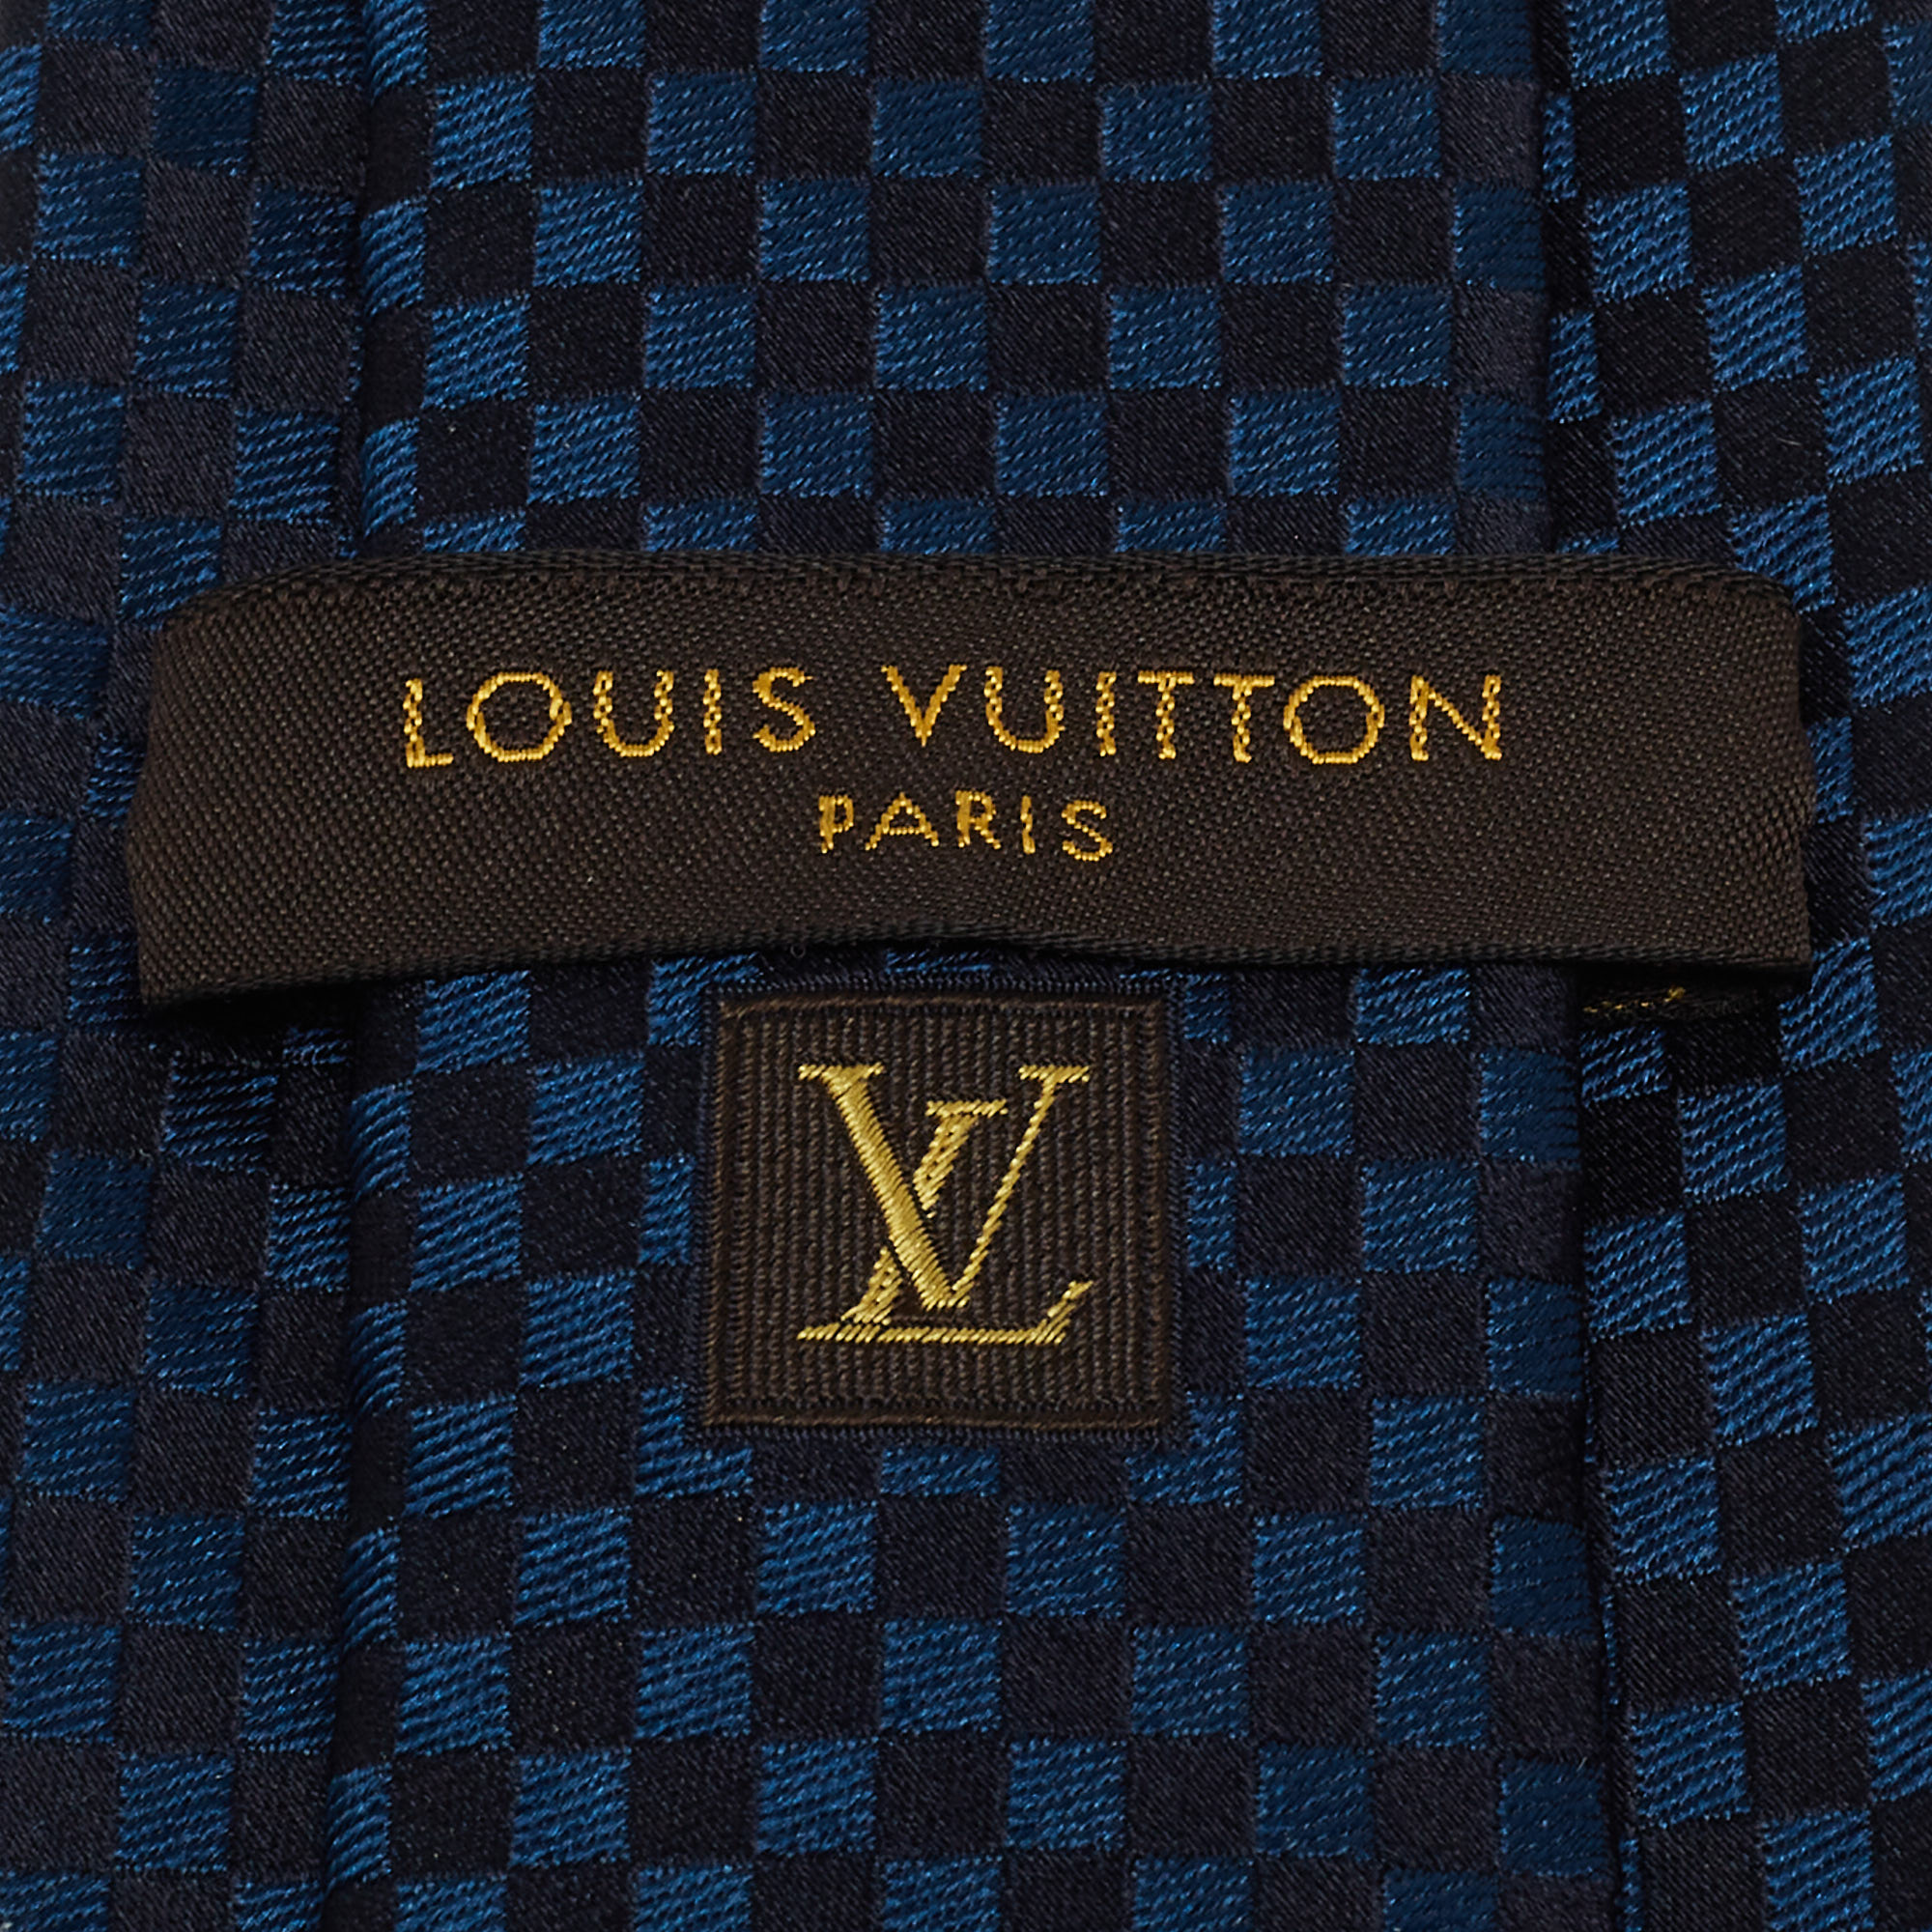 Louis Vuitton Navy Blue Two Tone Damier Silk Jacquard Tie